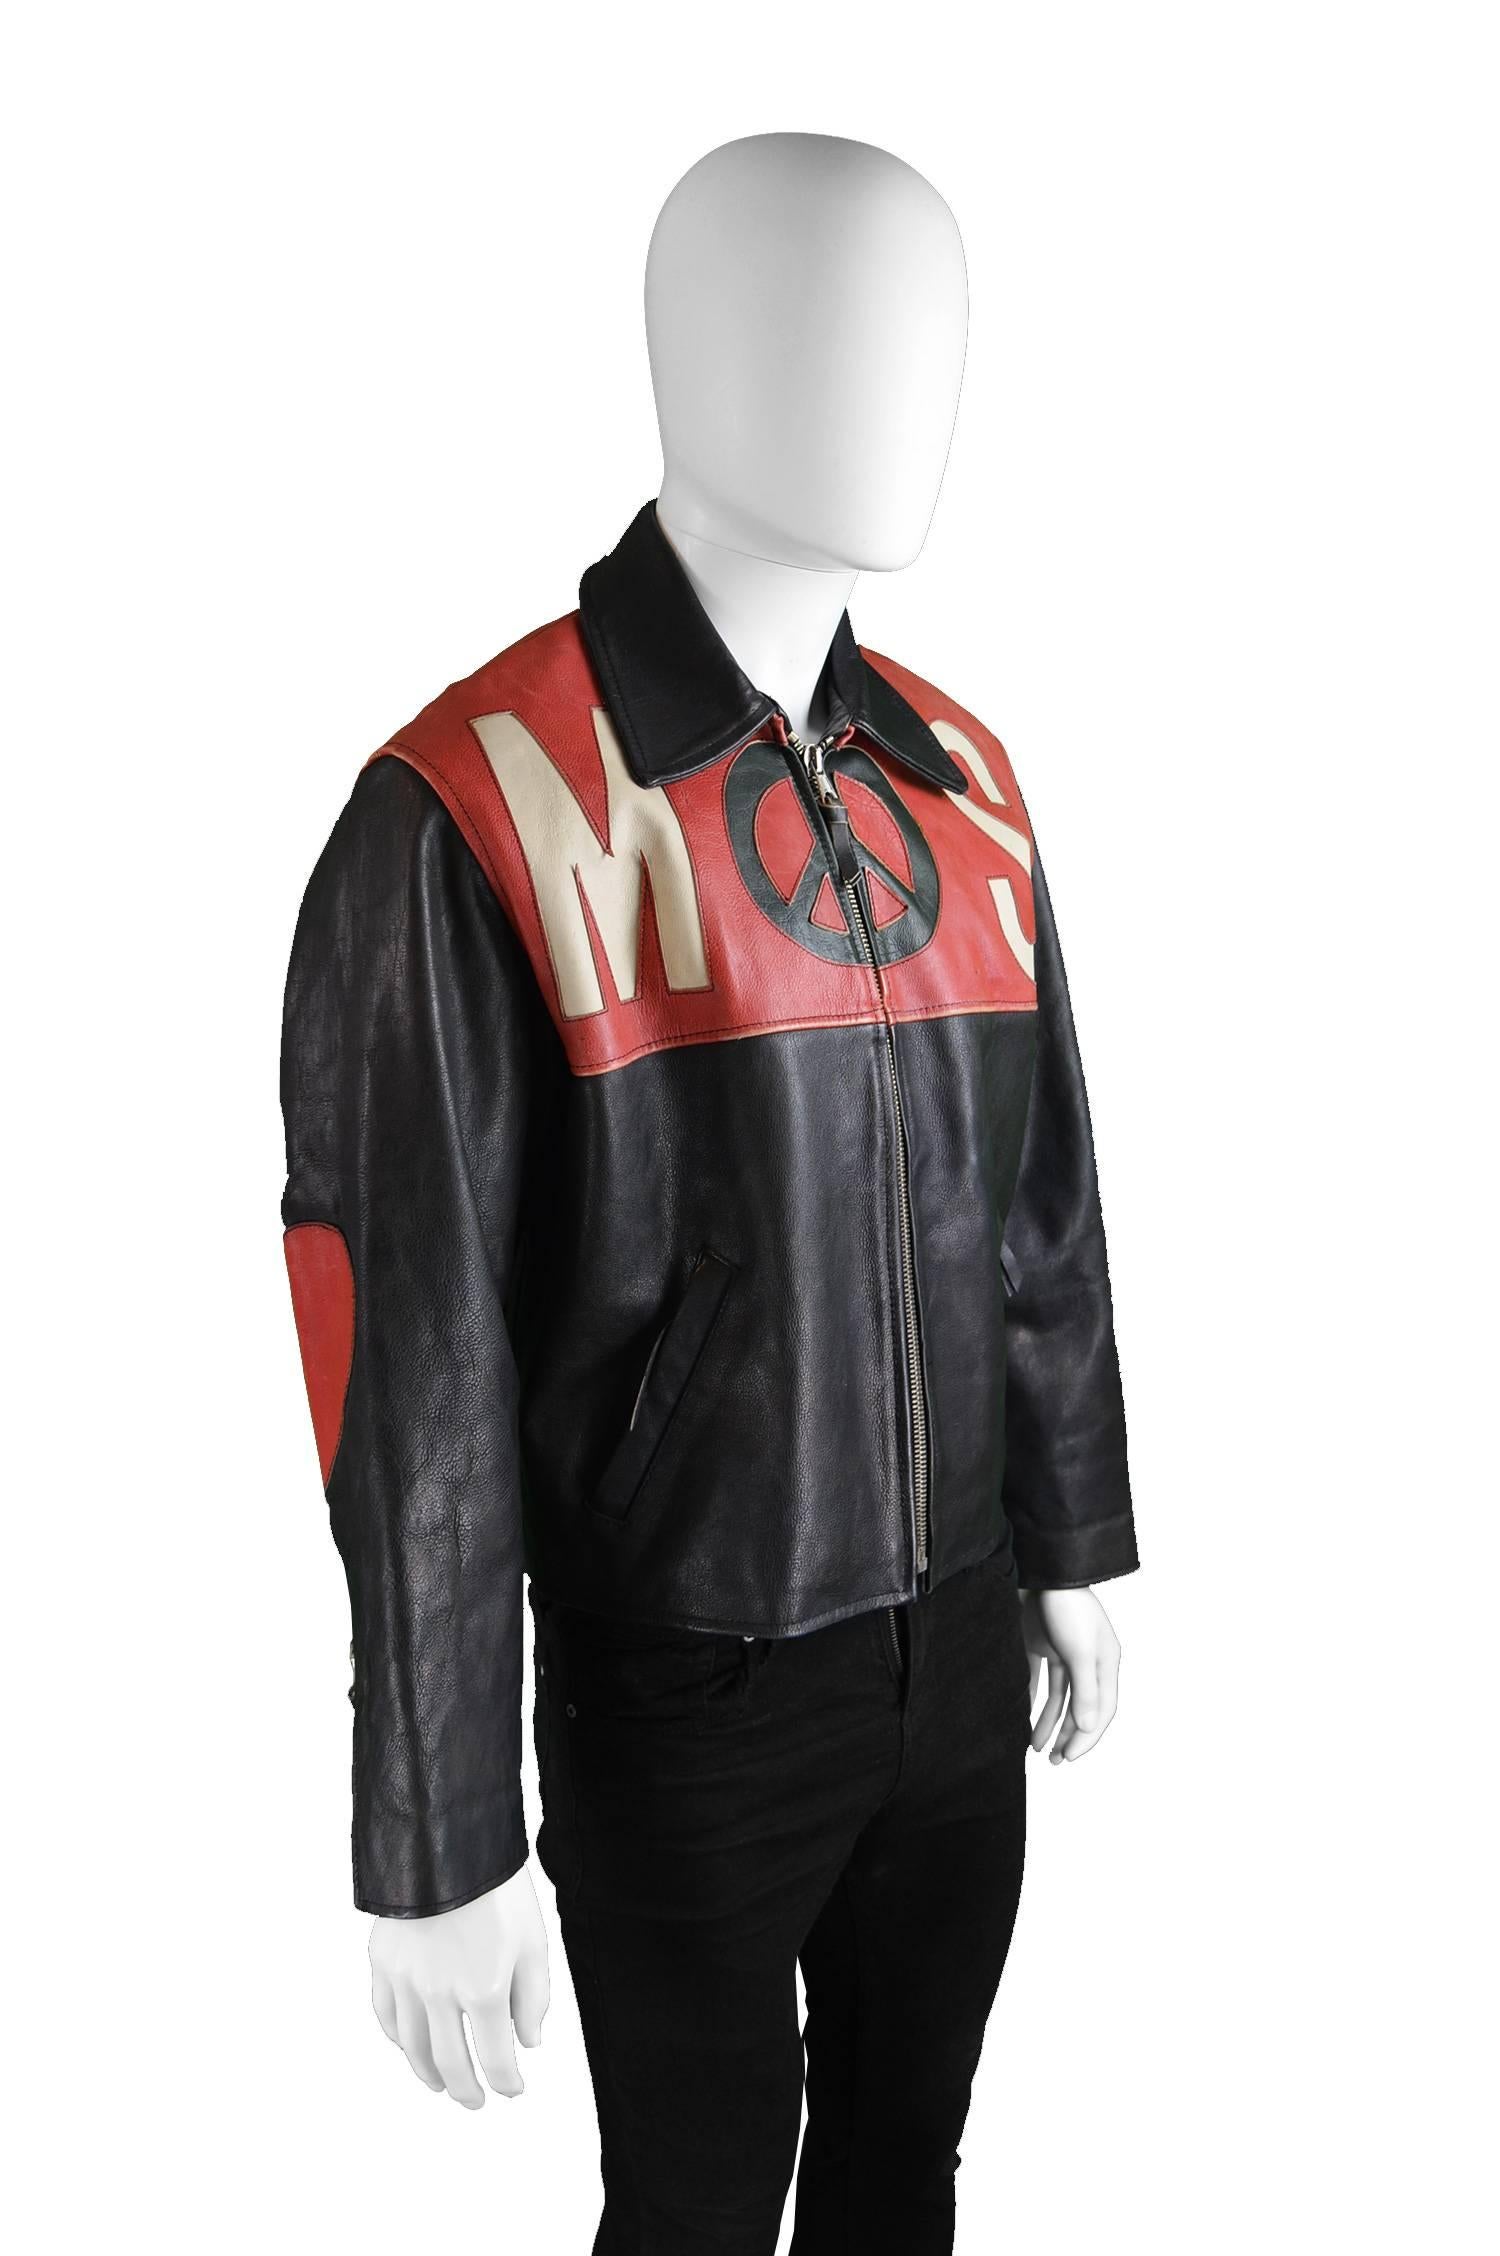 moschino mens jacket